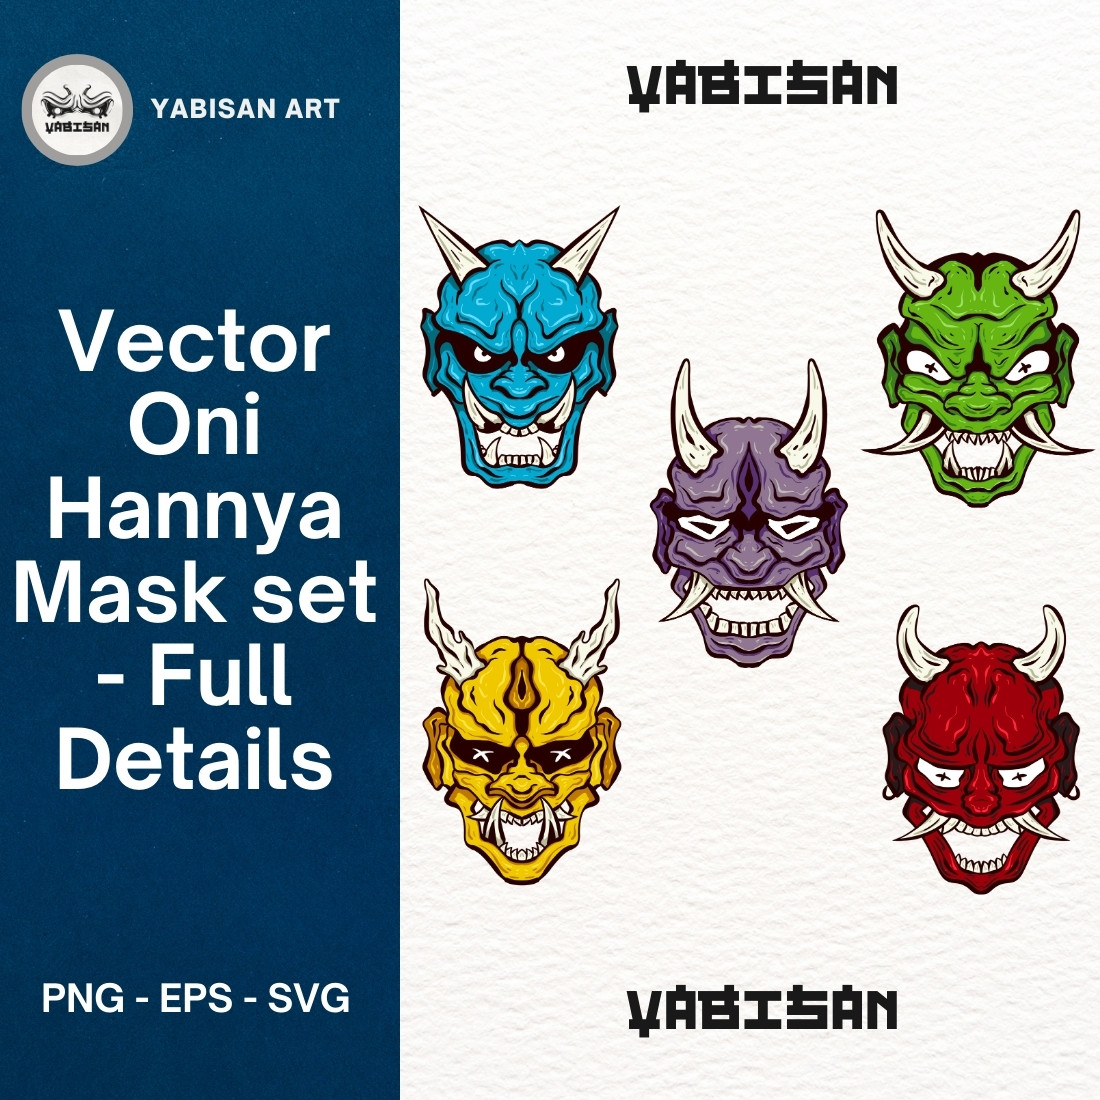 Oni Hannya Mask art set - Full Details preview image.